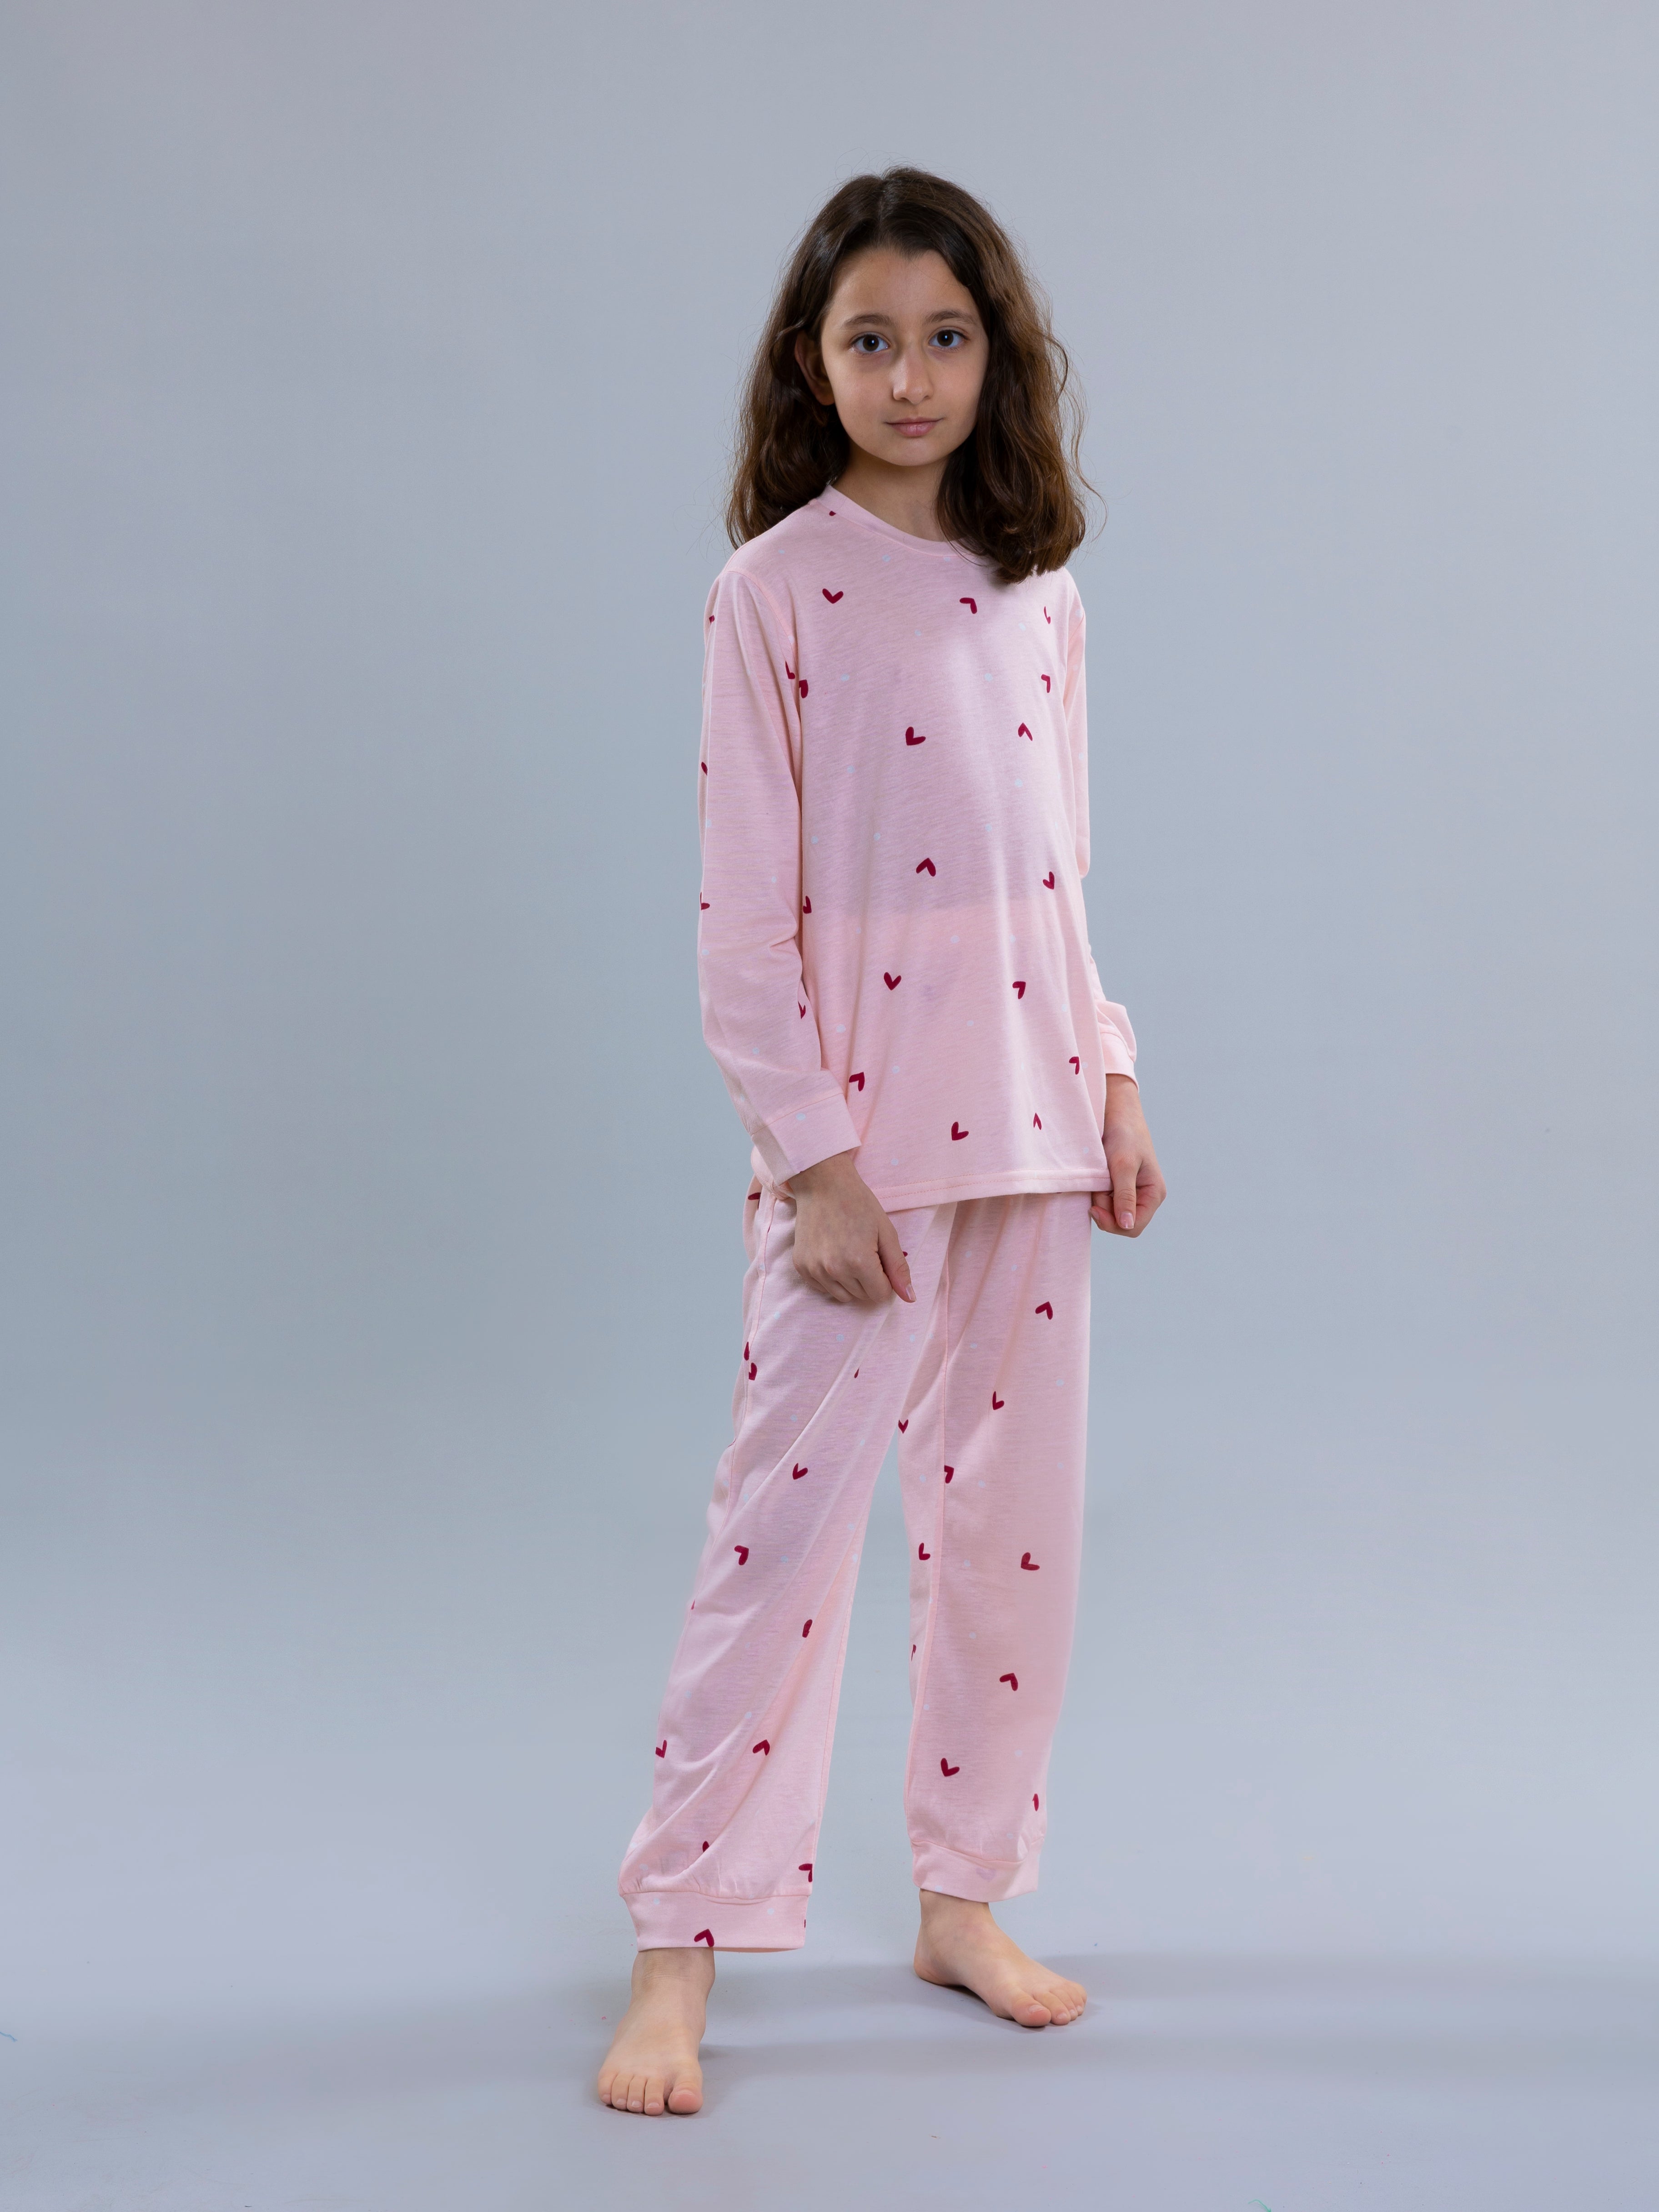 Mini heart pyjama set for Girls - pink - Pear